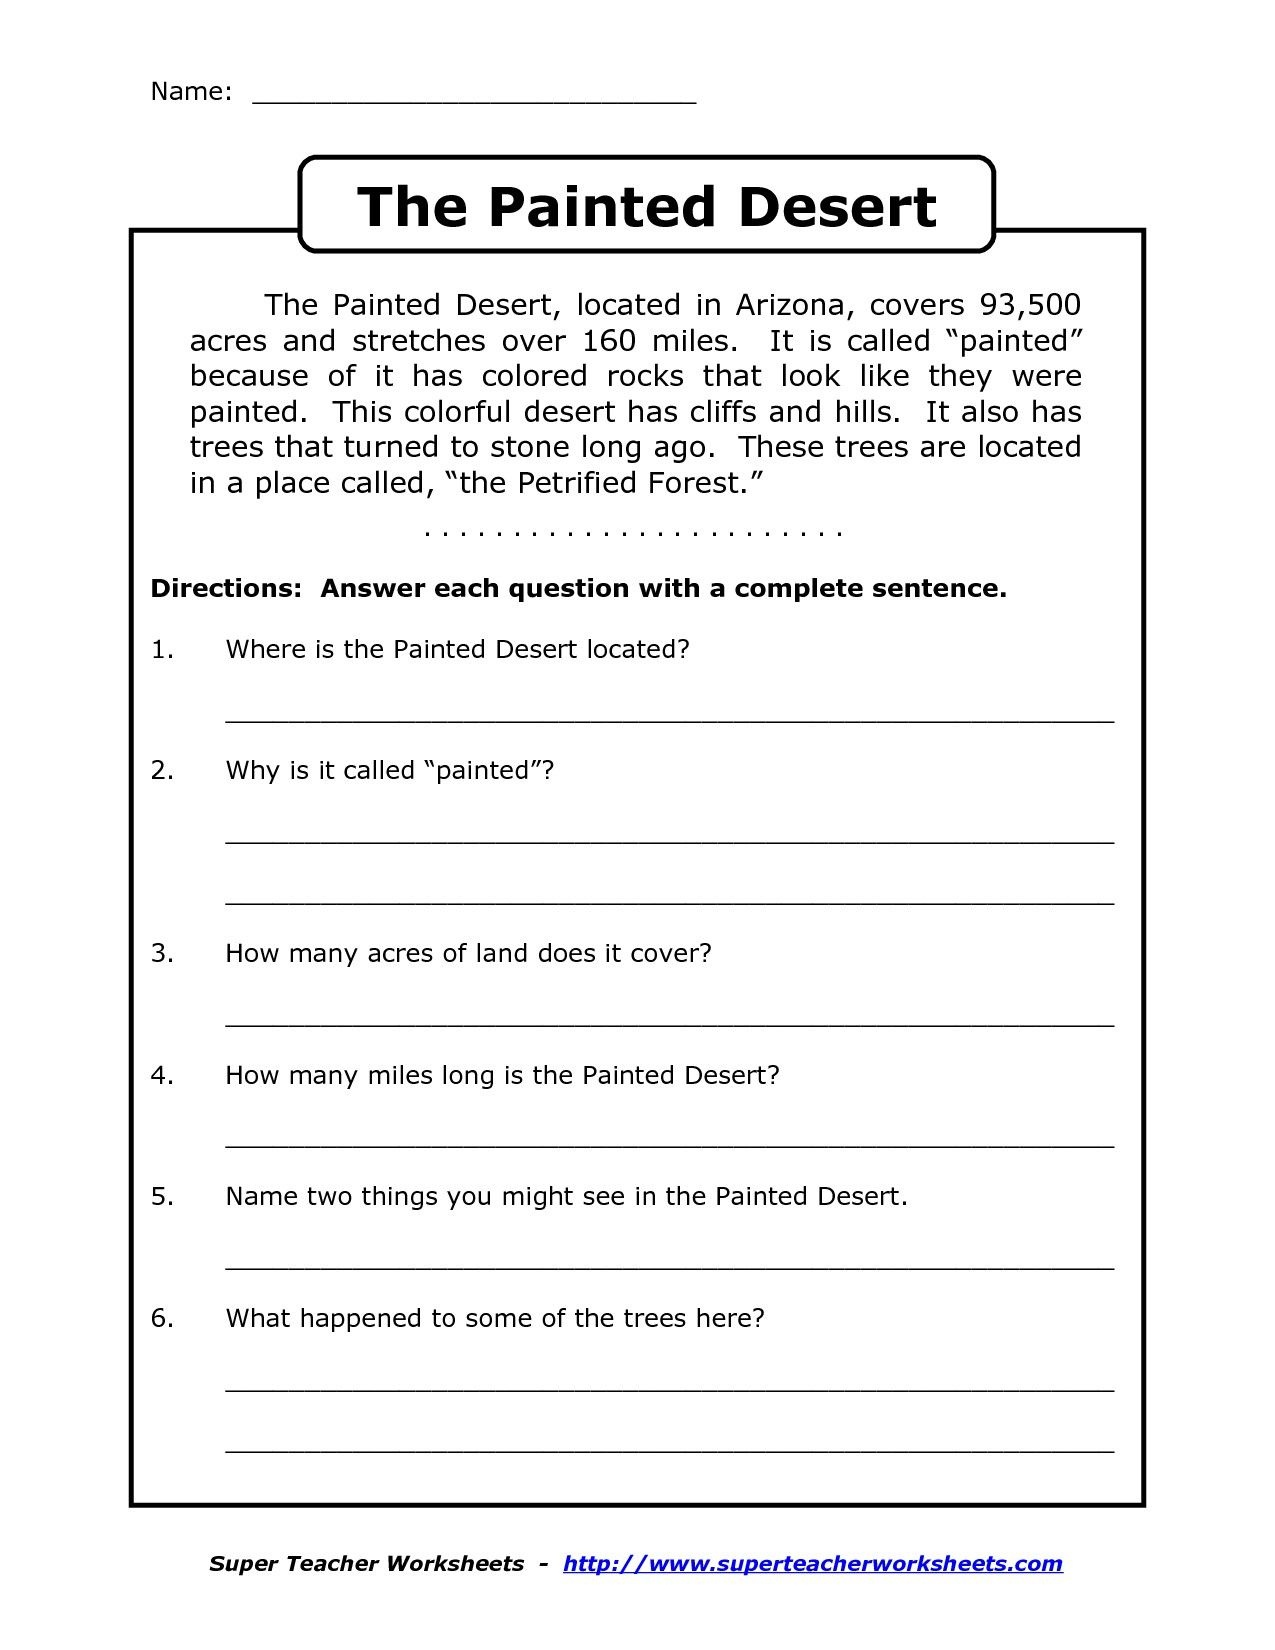 Image Result For Free Printable Worksheets For Grade 4 Comprehension - Free Printable Reading Comprehension Worksheets For 3Rd Grade